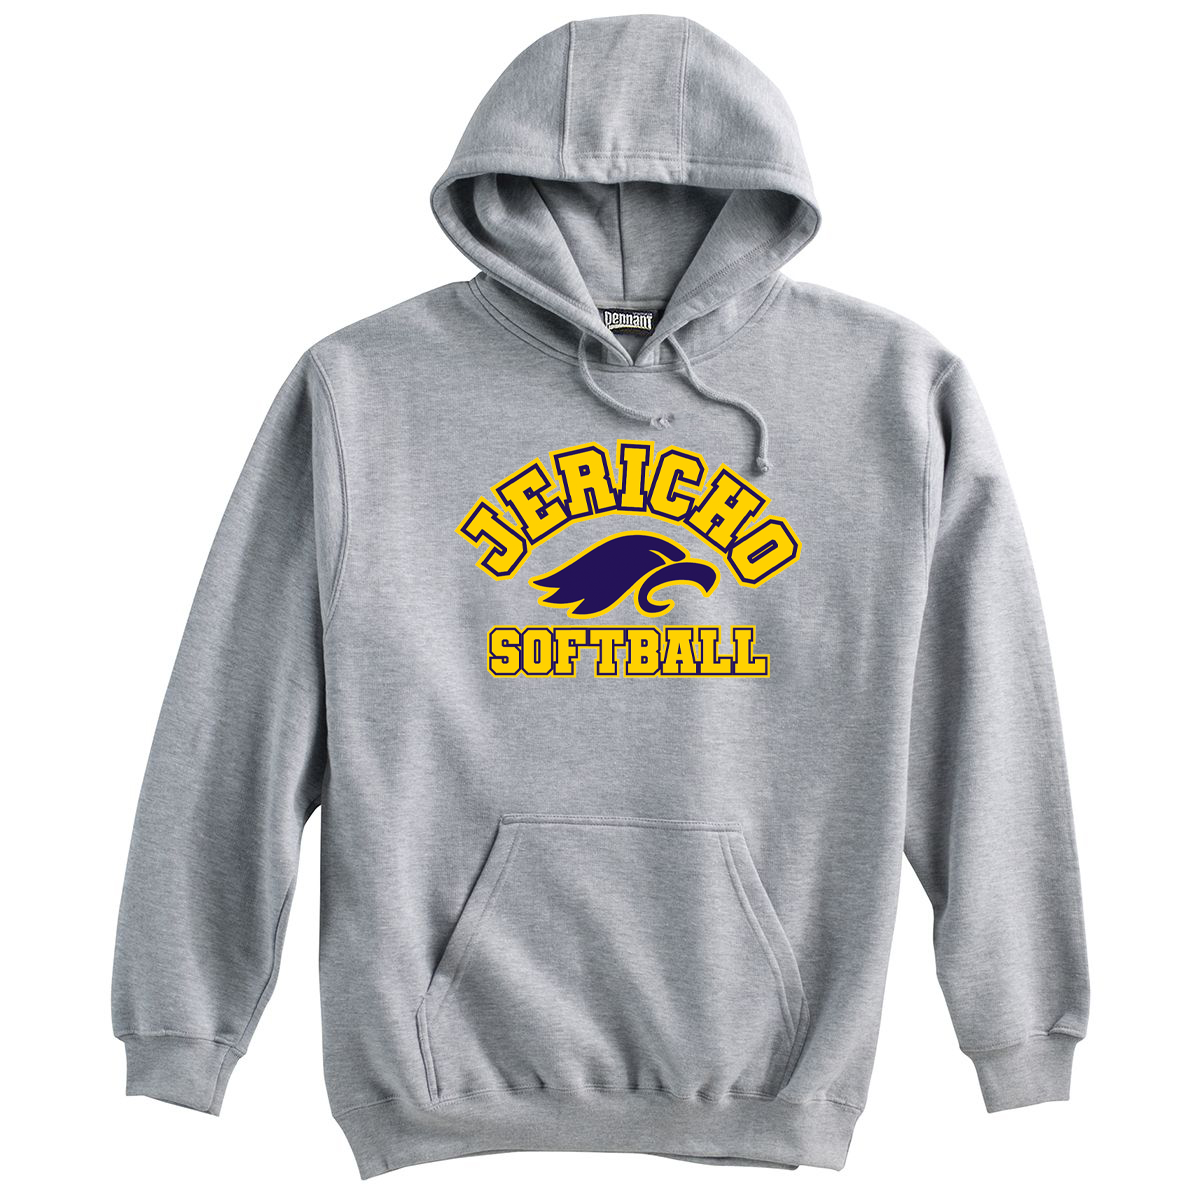 Jericho HS Softball Sweatshirt